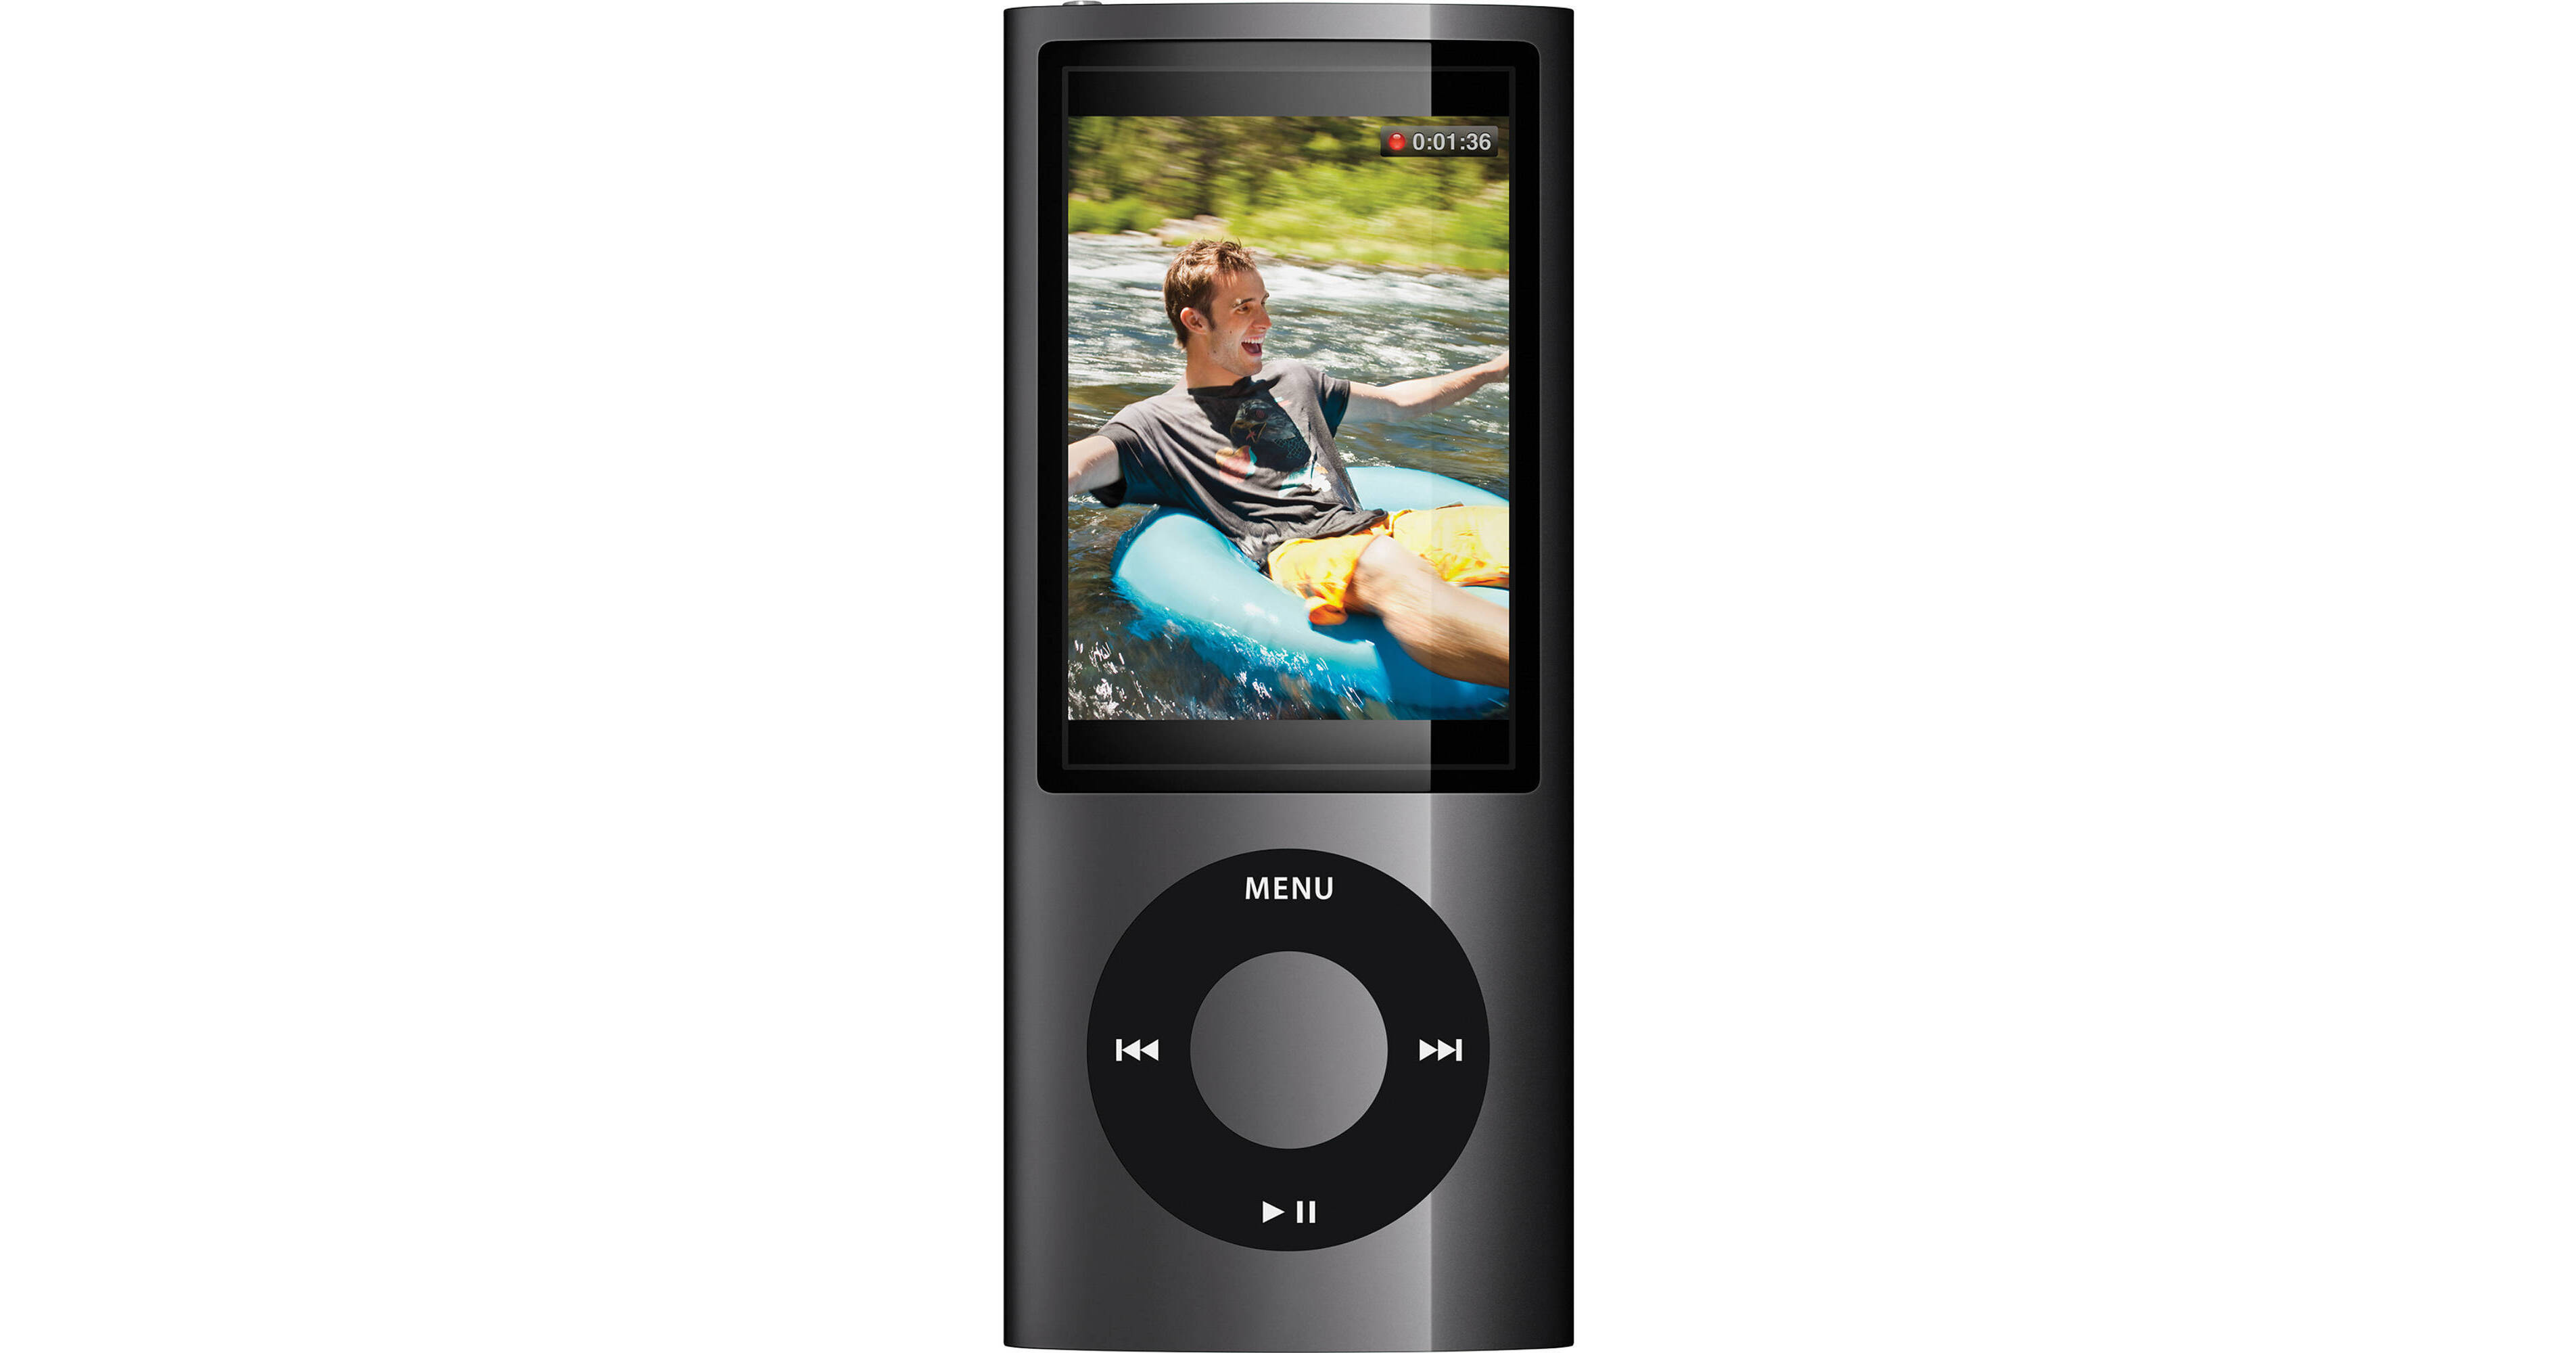 Apple 16GB iPod nano (Black) MC062LL/A B&H Photo Video